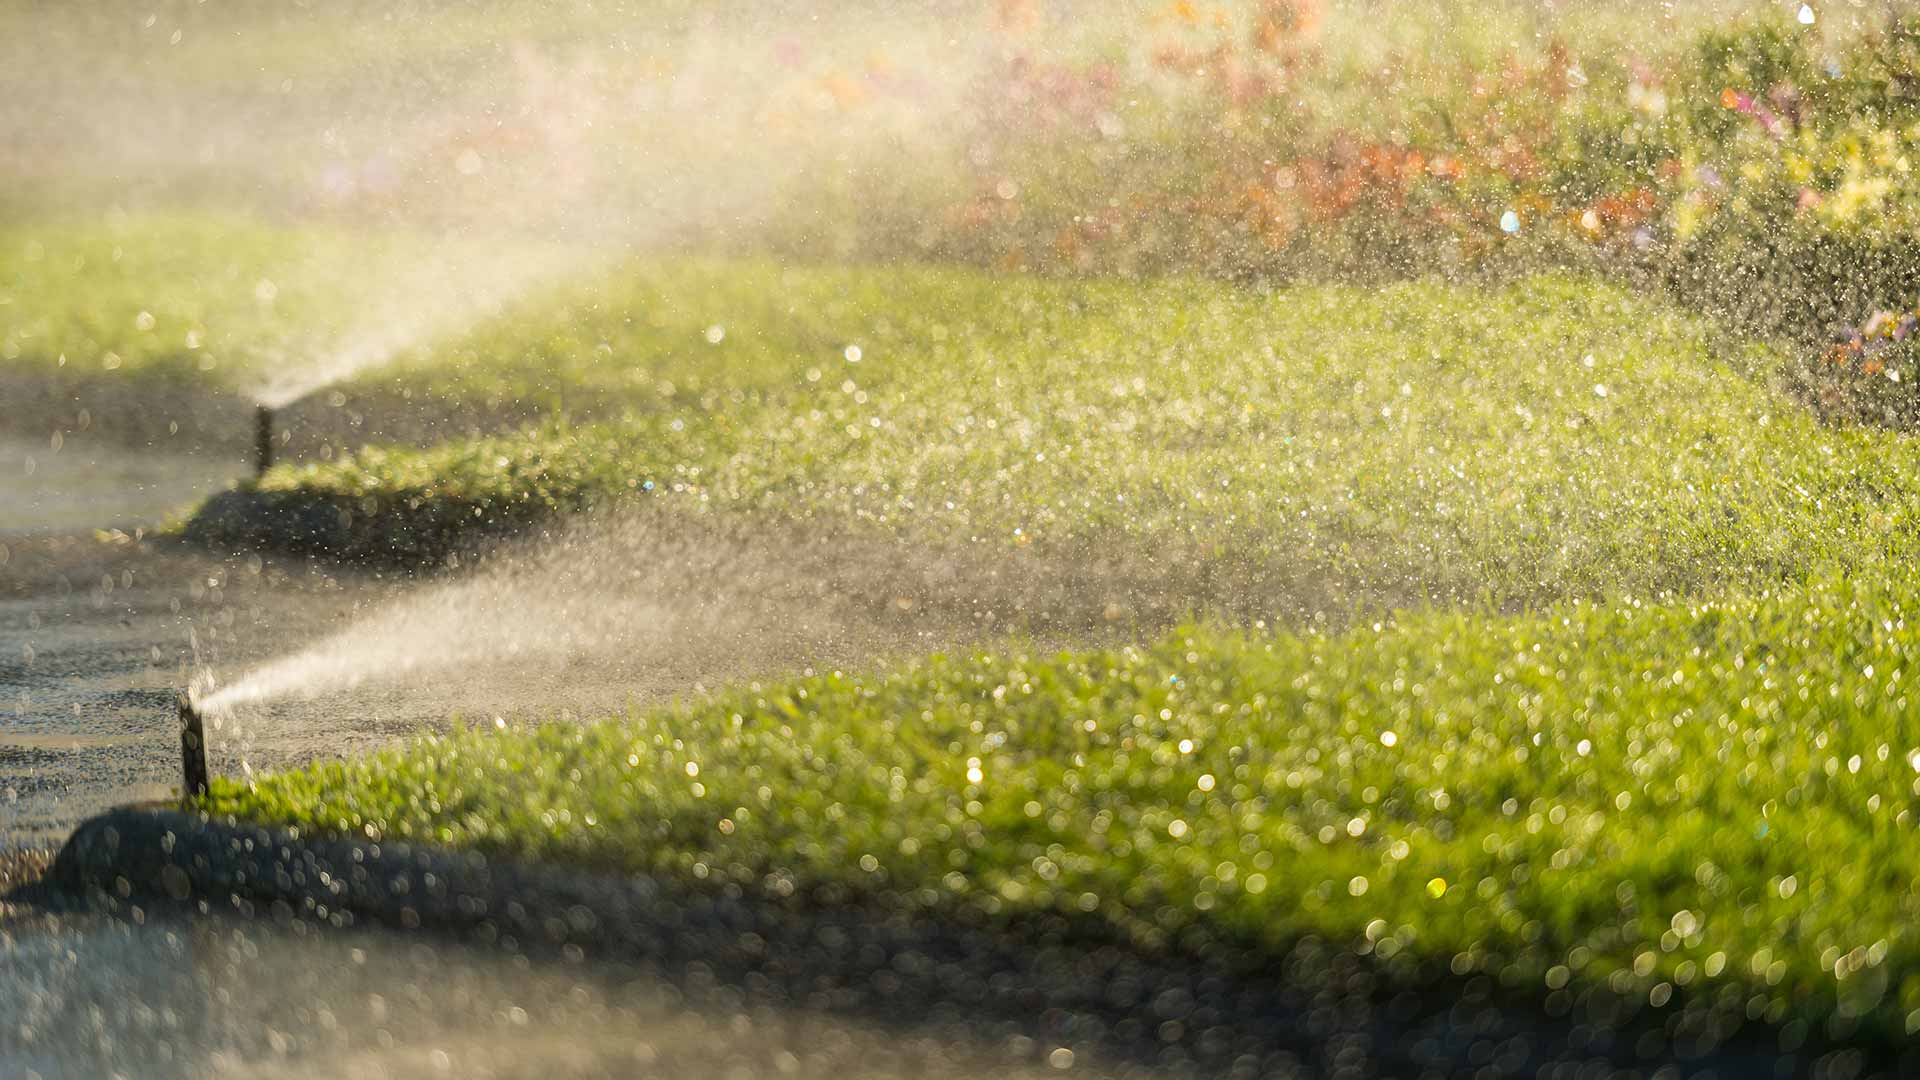 Set of lawn sprinklers watering a lawn in Aspen Woods, AB.